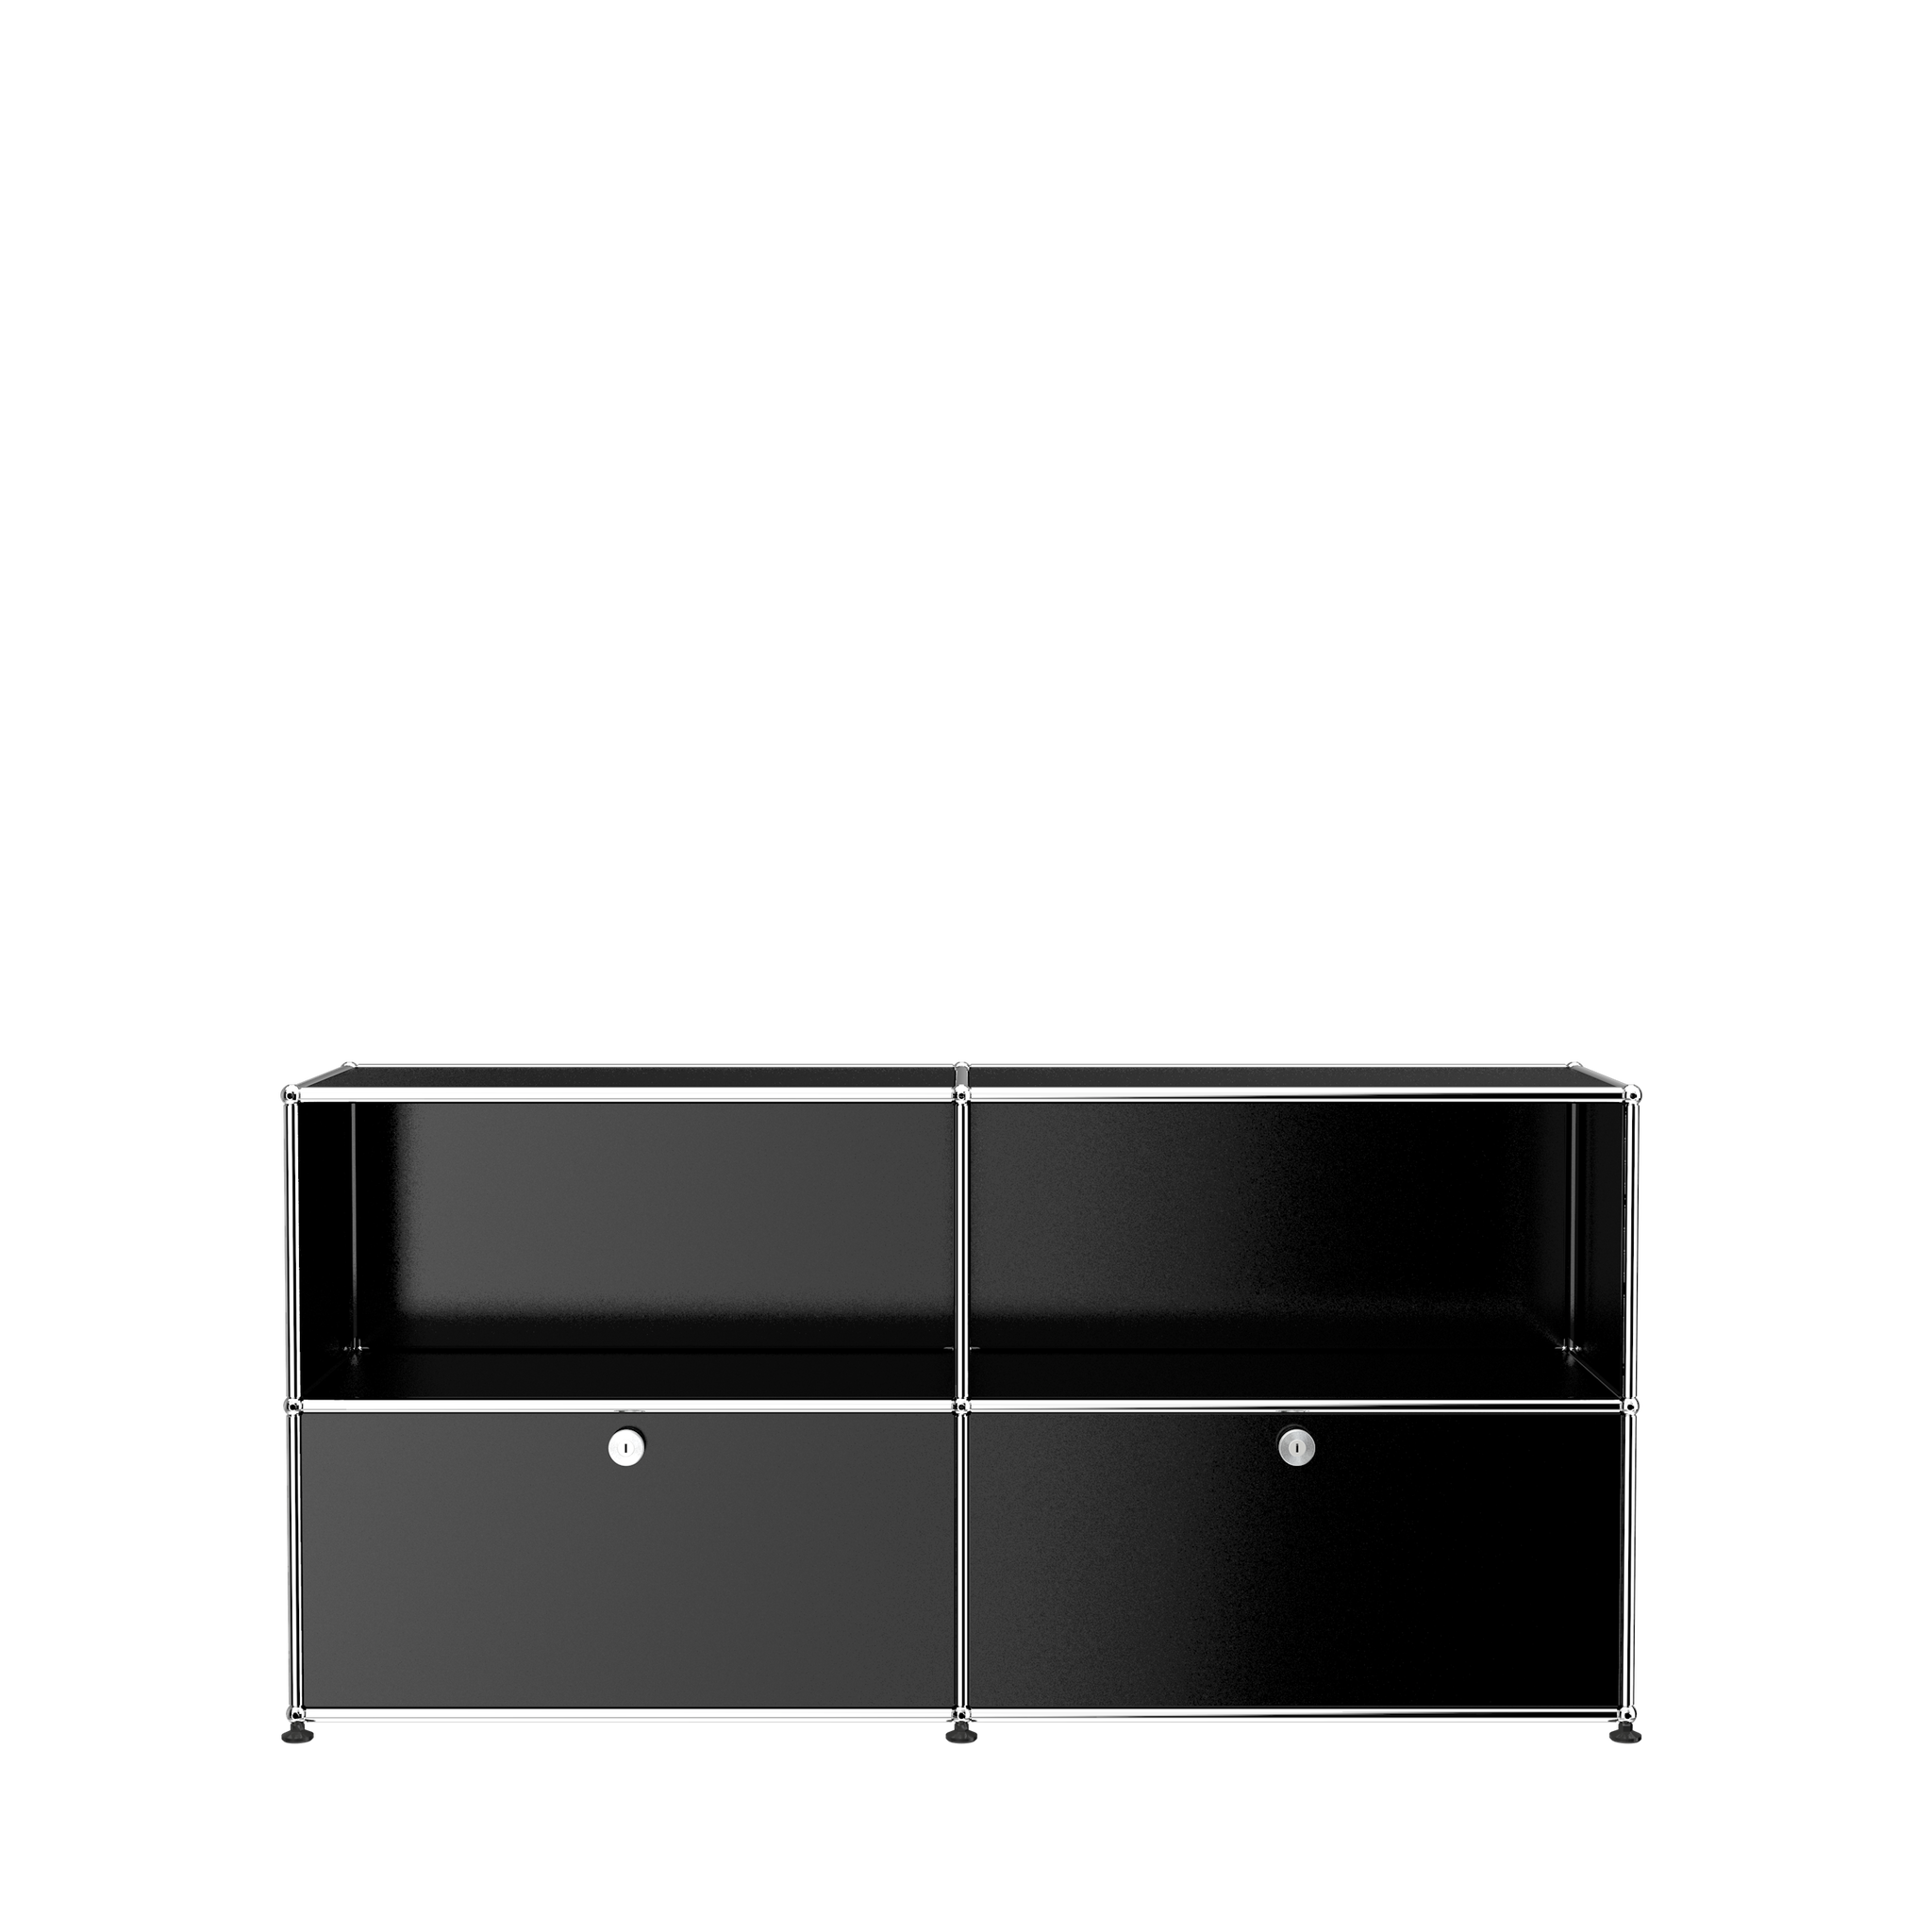 USM Haller Steel 2 Door Credenza File Cabinet (C2A) in Graphite Black